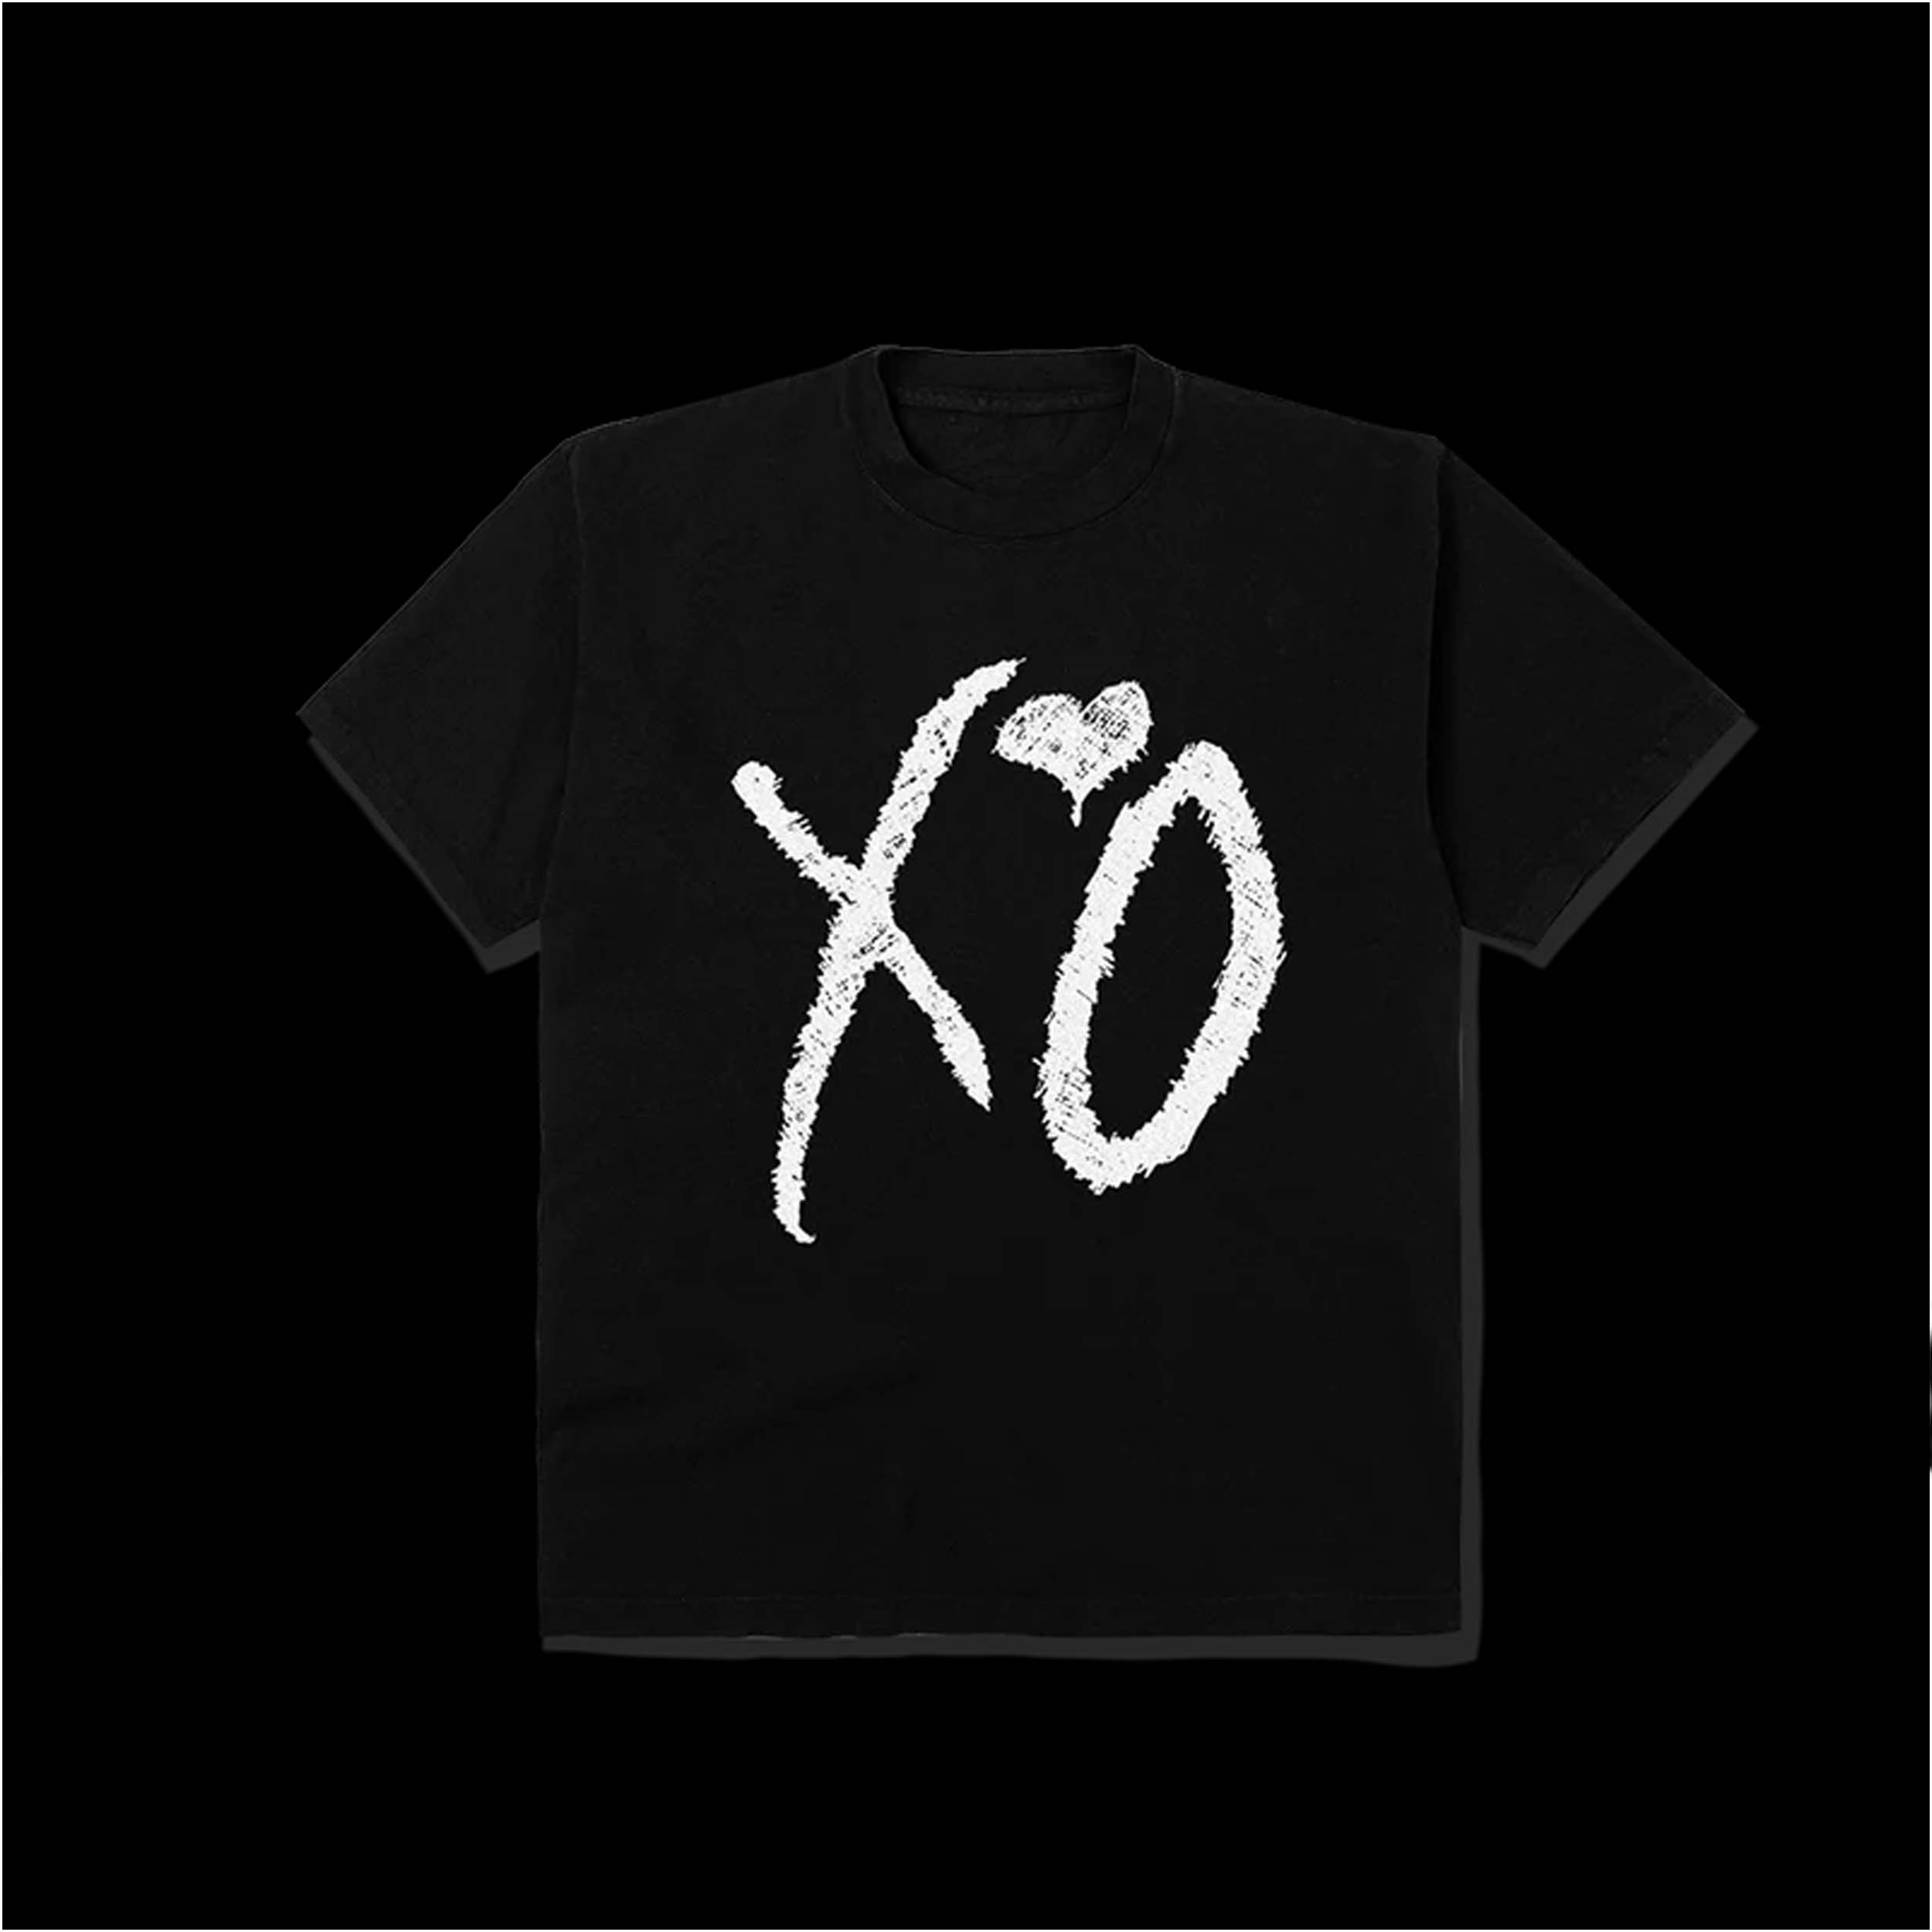 XO The Weeknd Merch After Hours Til Dawn Tour Abel Tesfaye - T-shirt